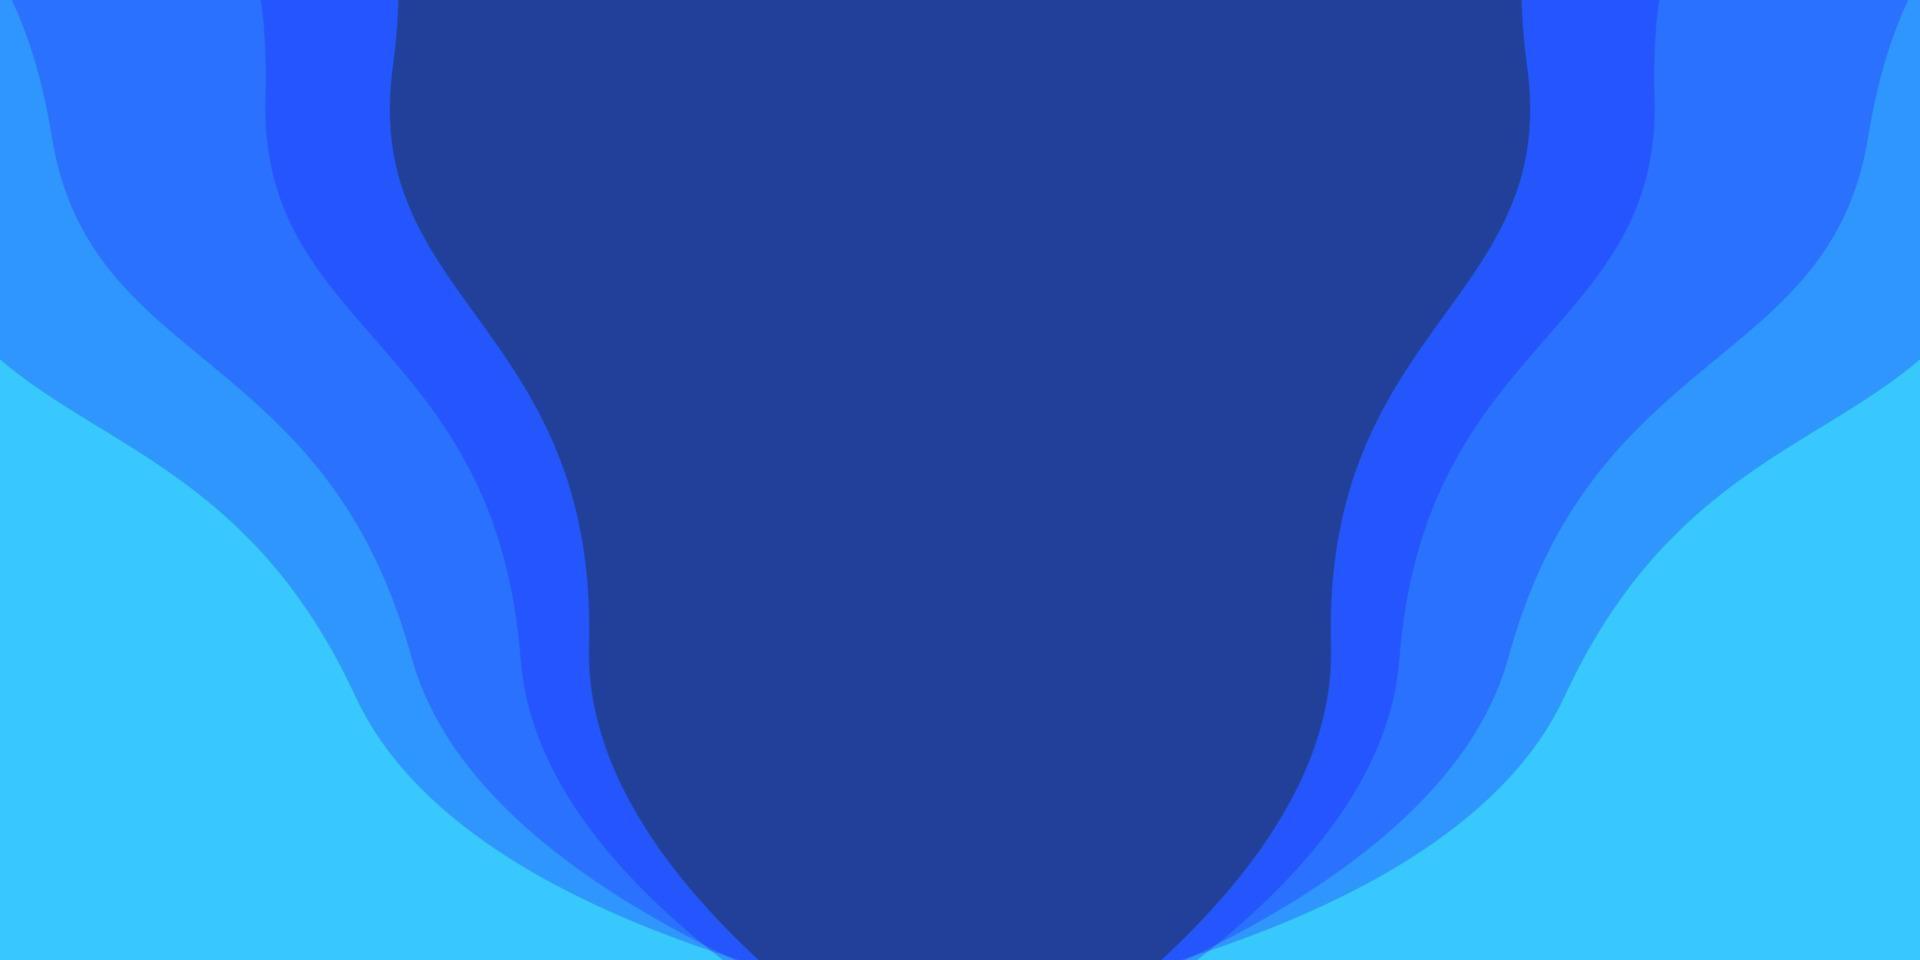 wave blue background vector